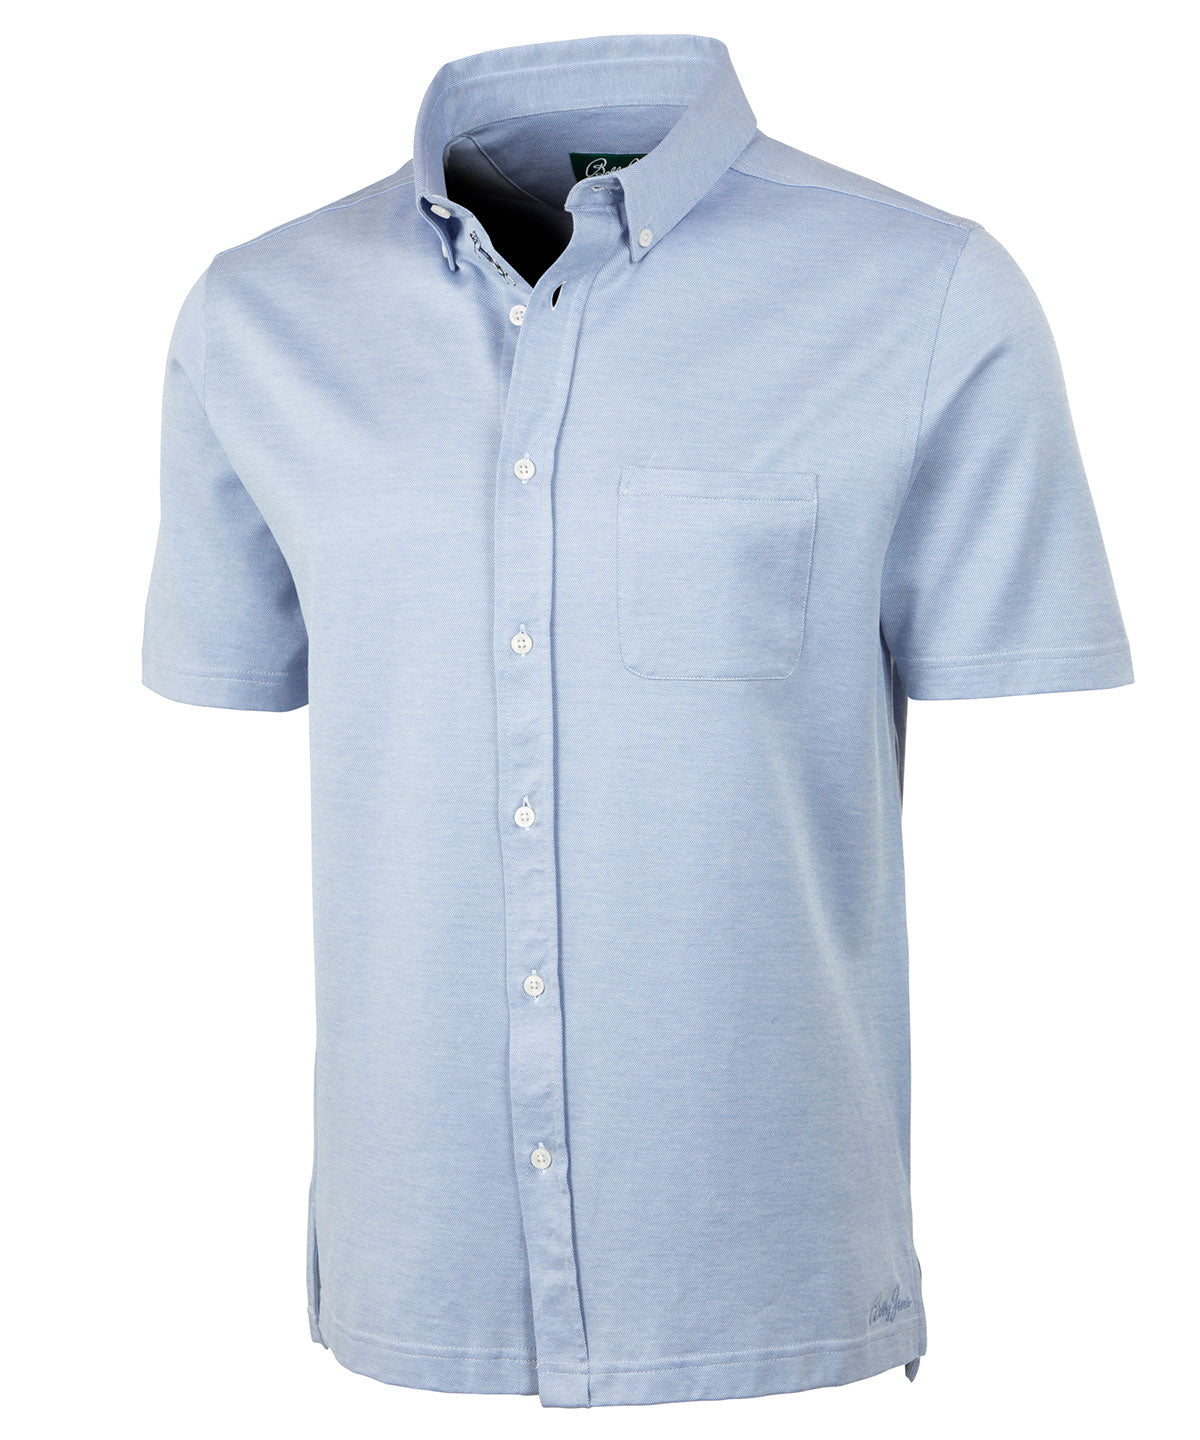 Signature Cotton Knit Long-Sleeve Cabana Tee Shirt - Bobby Jones